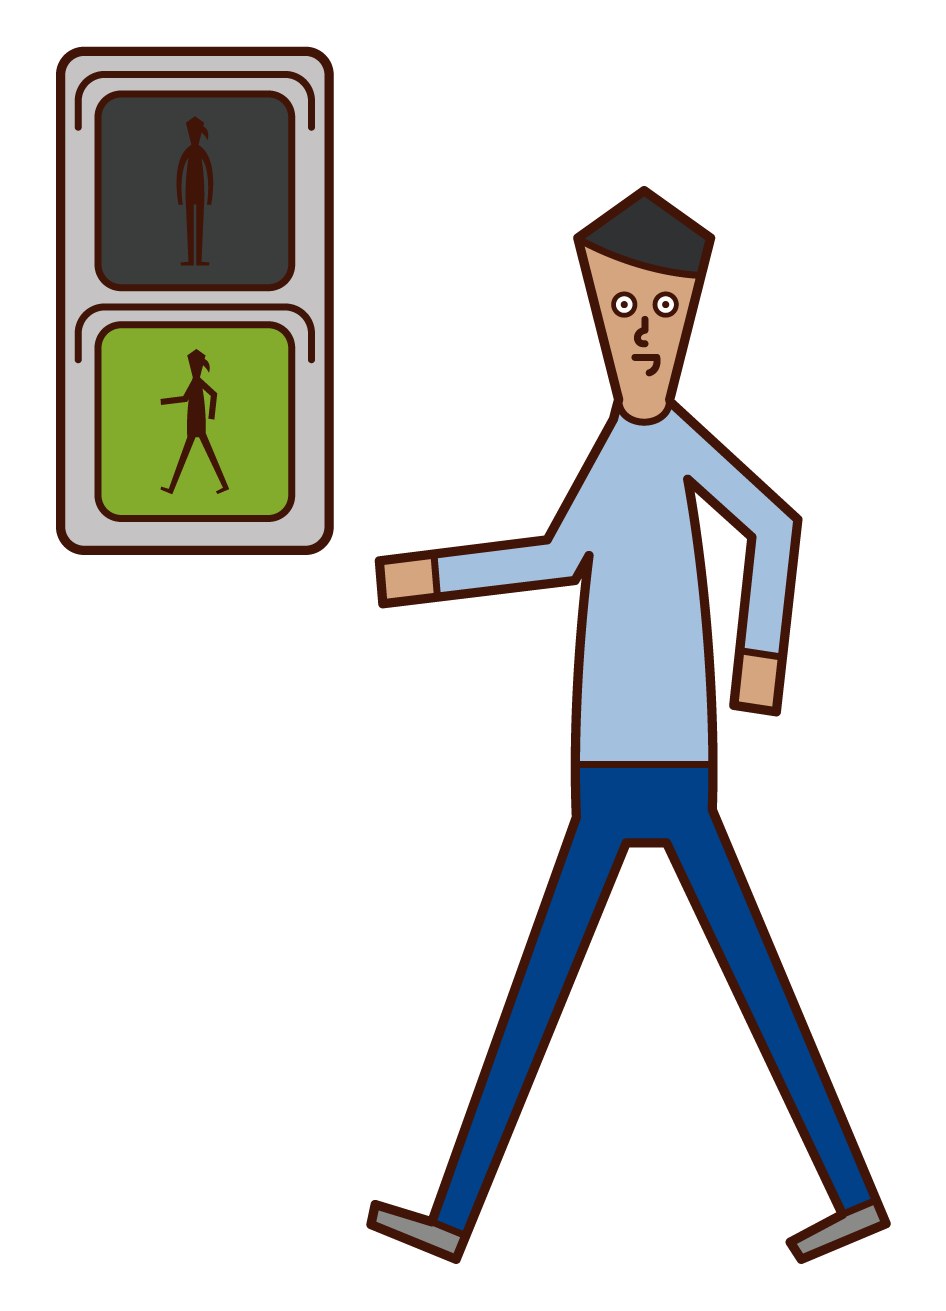 Illustration of a man advancing at a green light